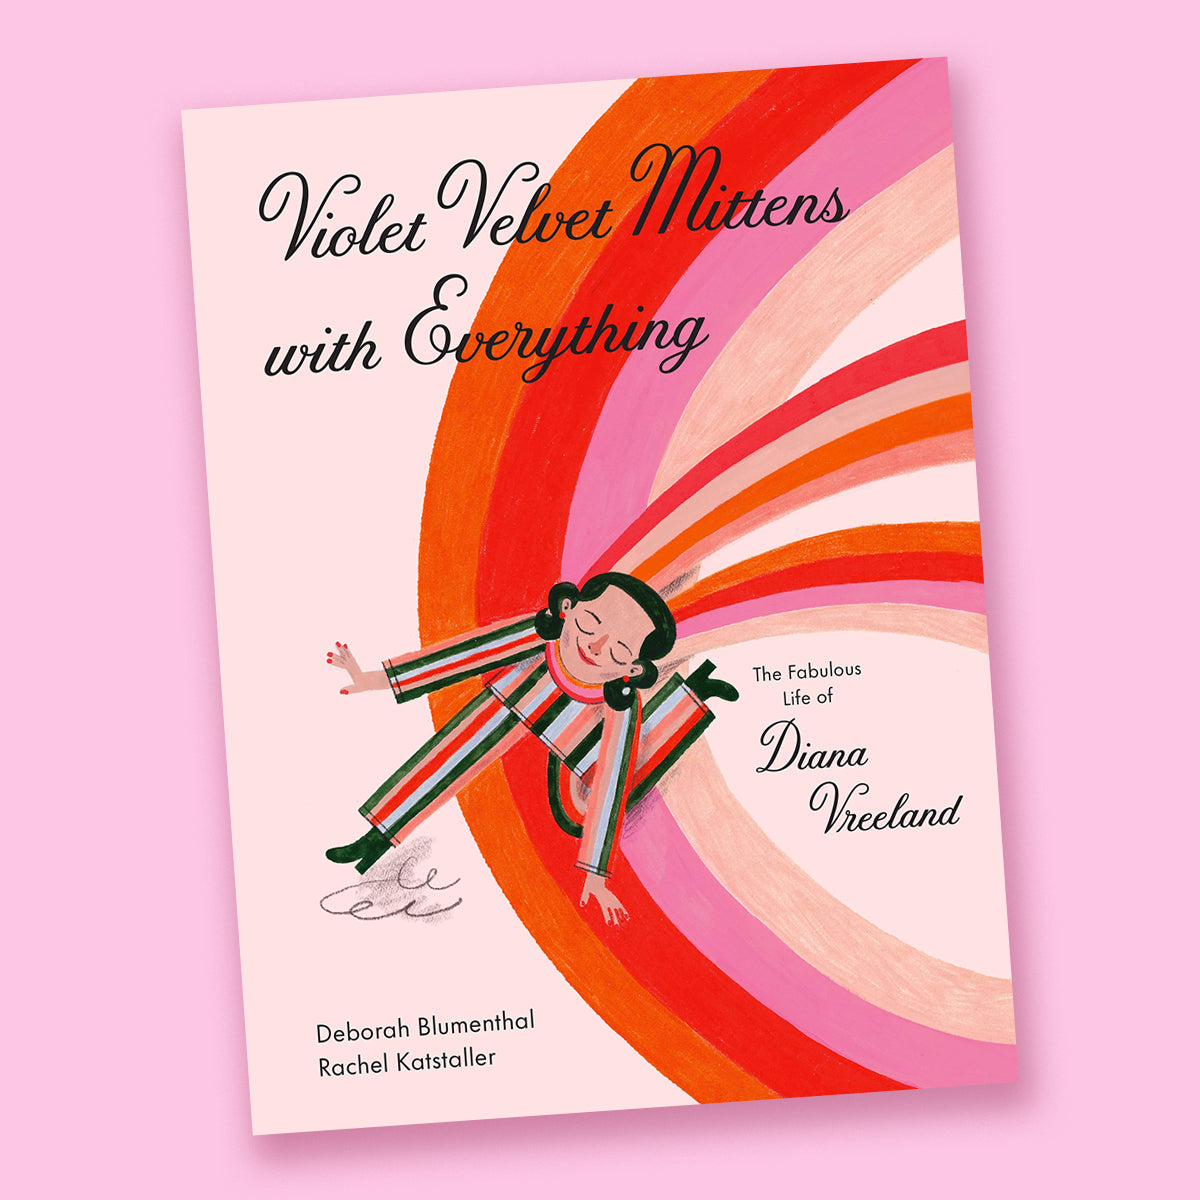 Violet Velvet Mittens with Everything: The Fabulous Life of Diana Vreeland by Deborah Blumenthal and Rachel Katstaller